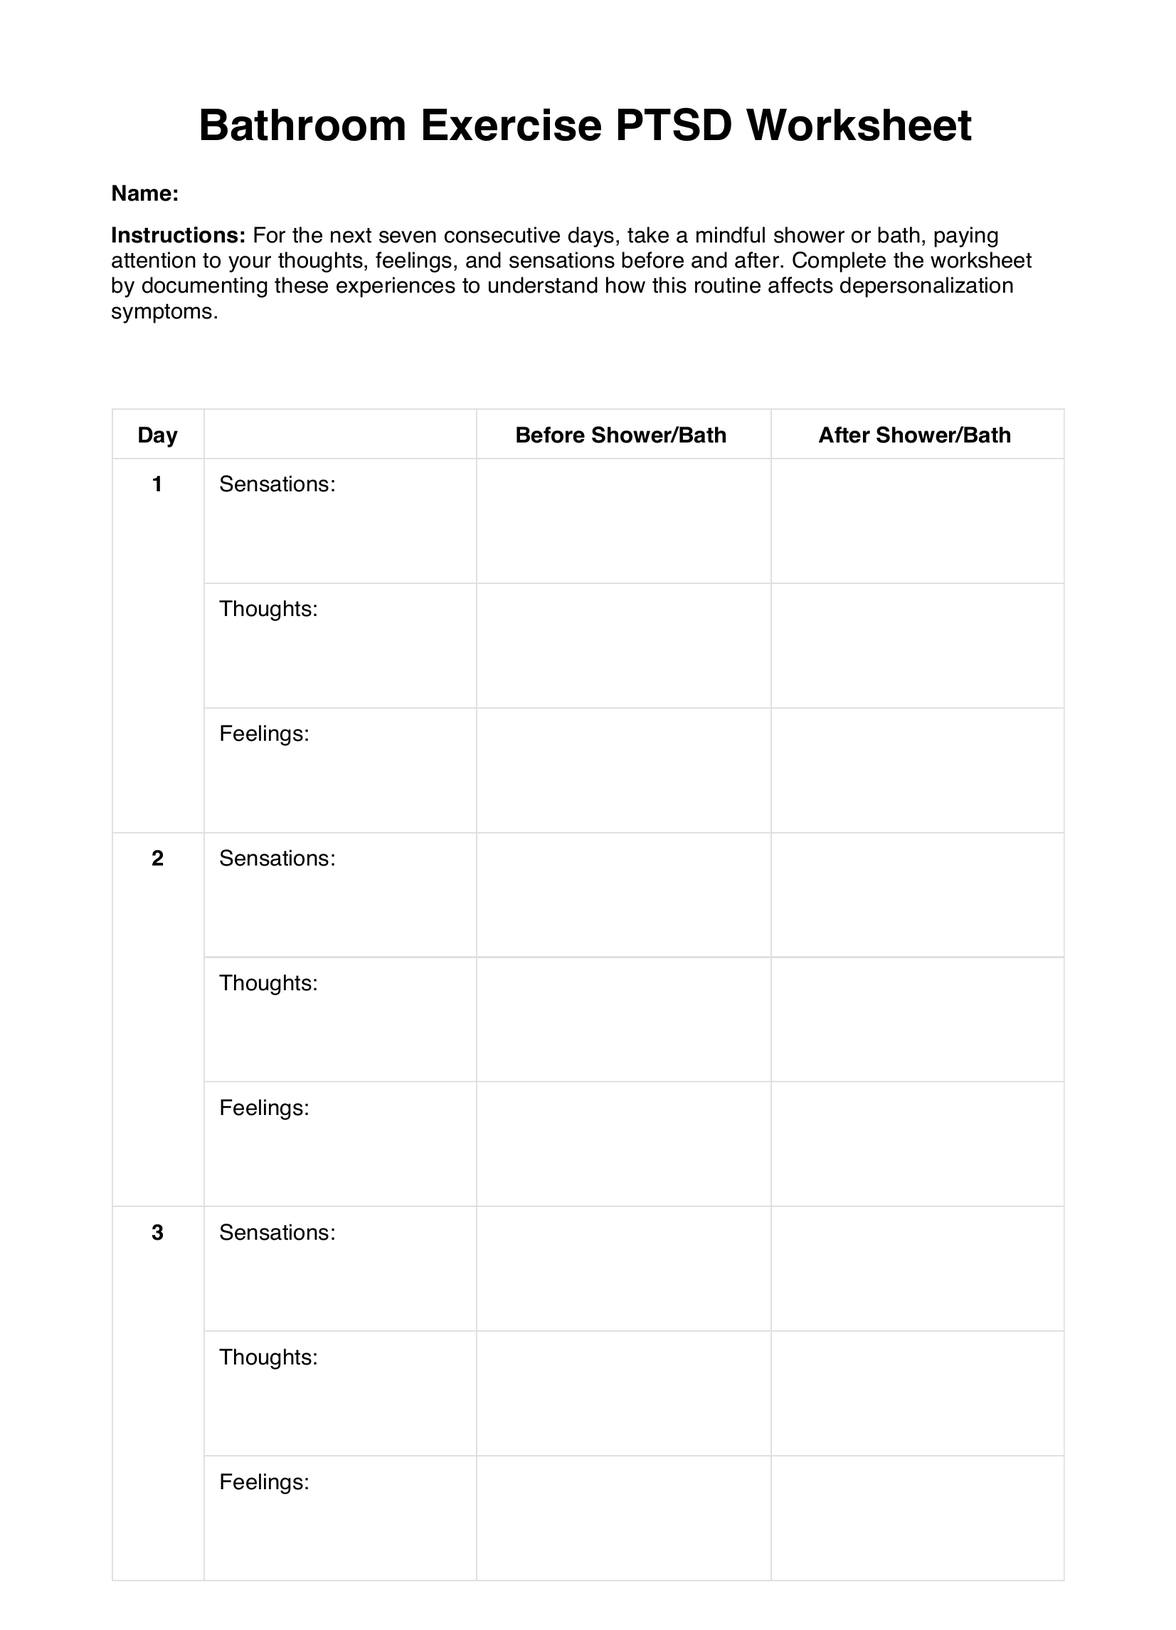 Bathroom Exercise PTSD Worksheet PDF Example